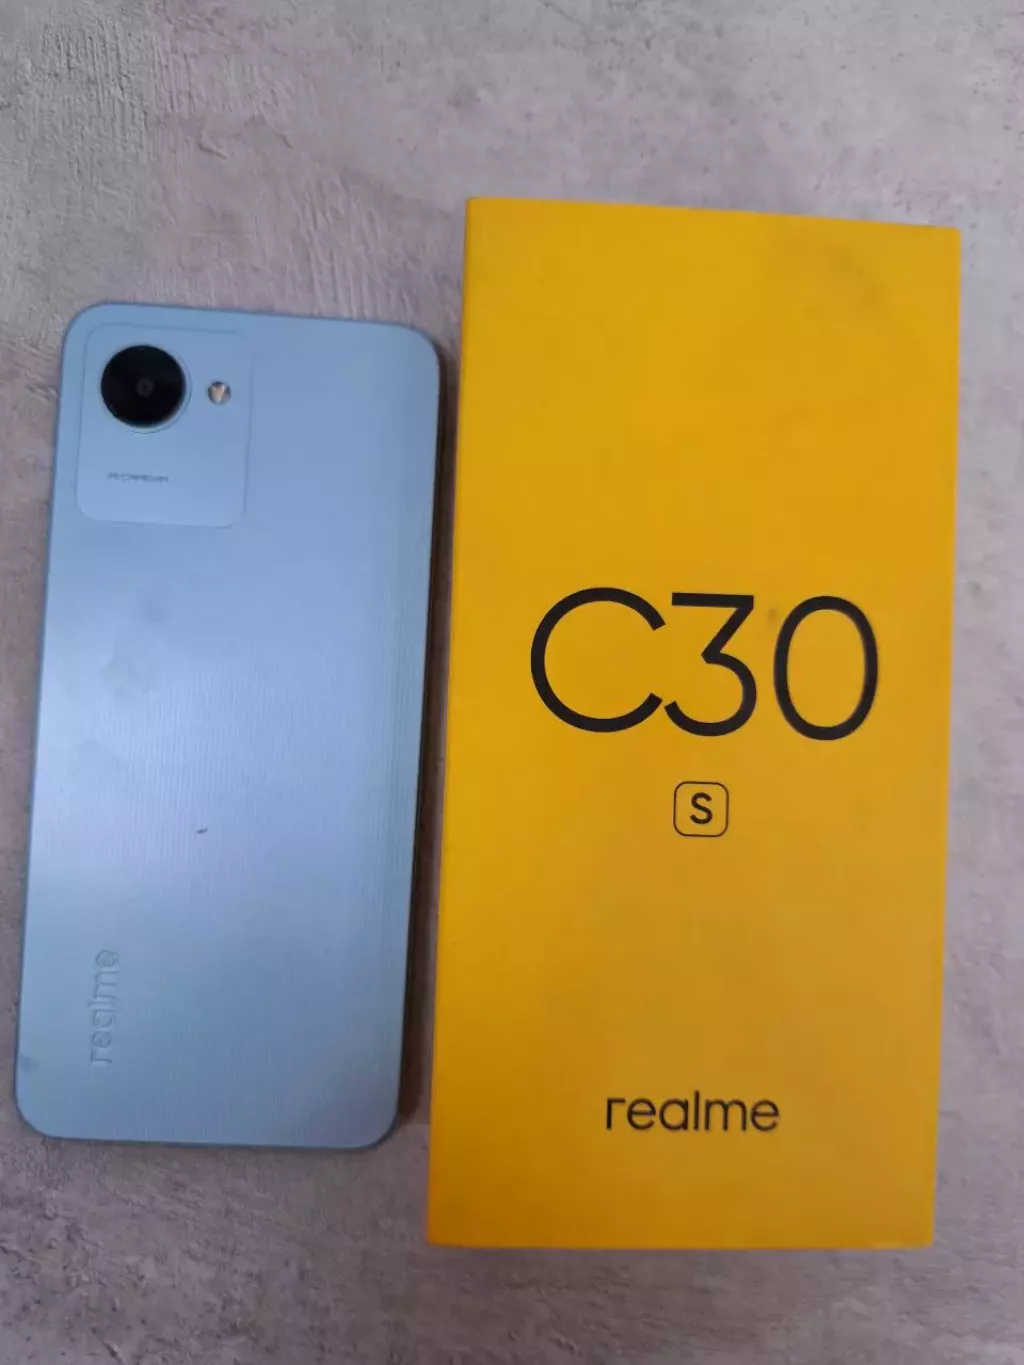 Купить б/у Oppo Realme C30s, 32 гб, Костанай 1015, лот 355354-0